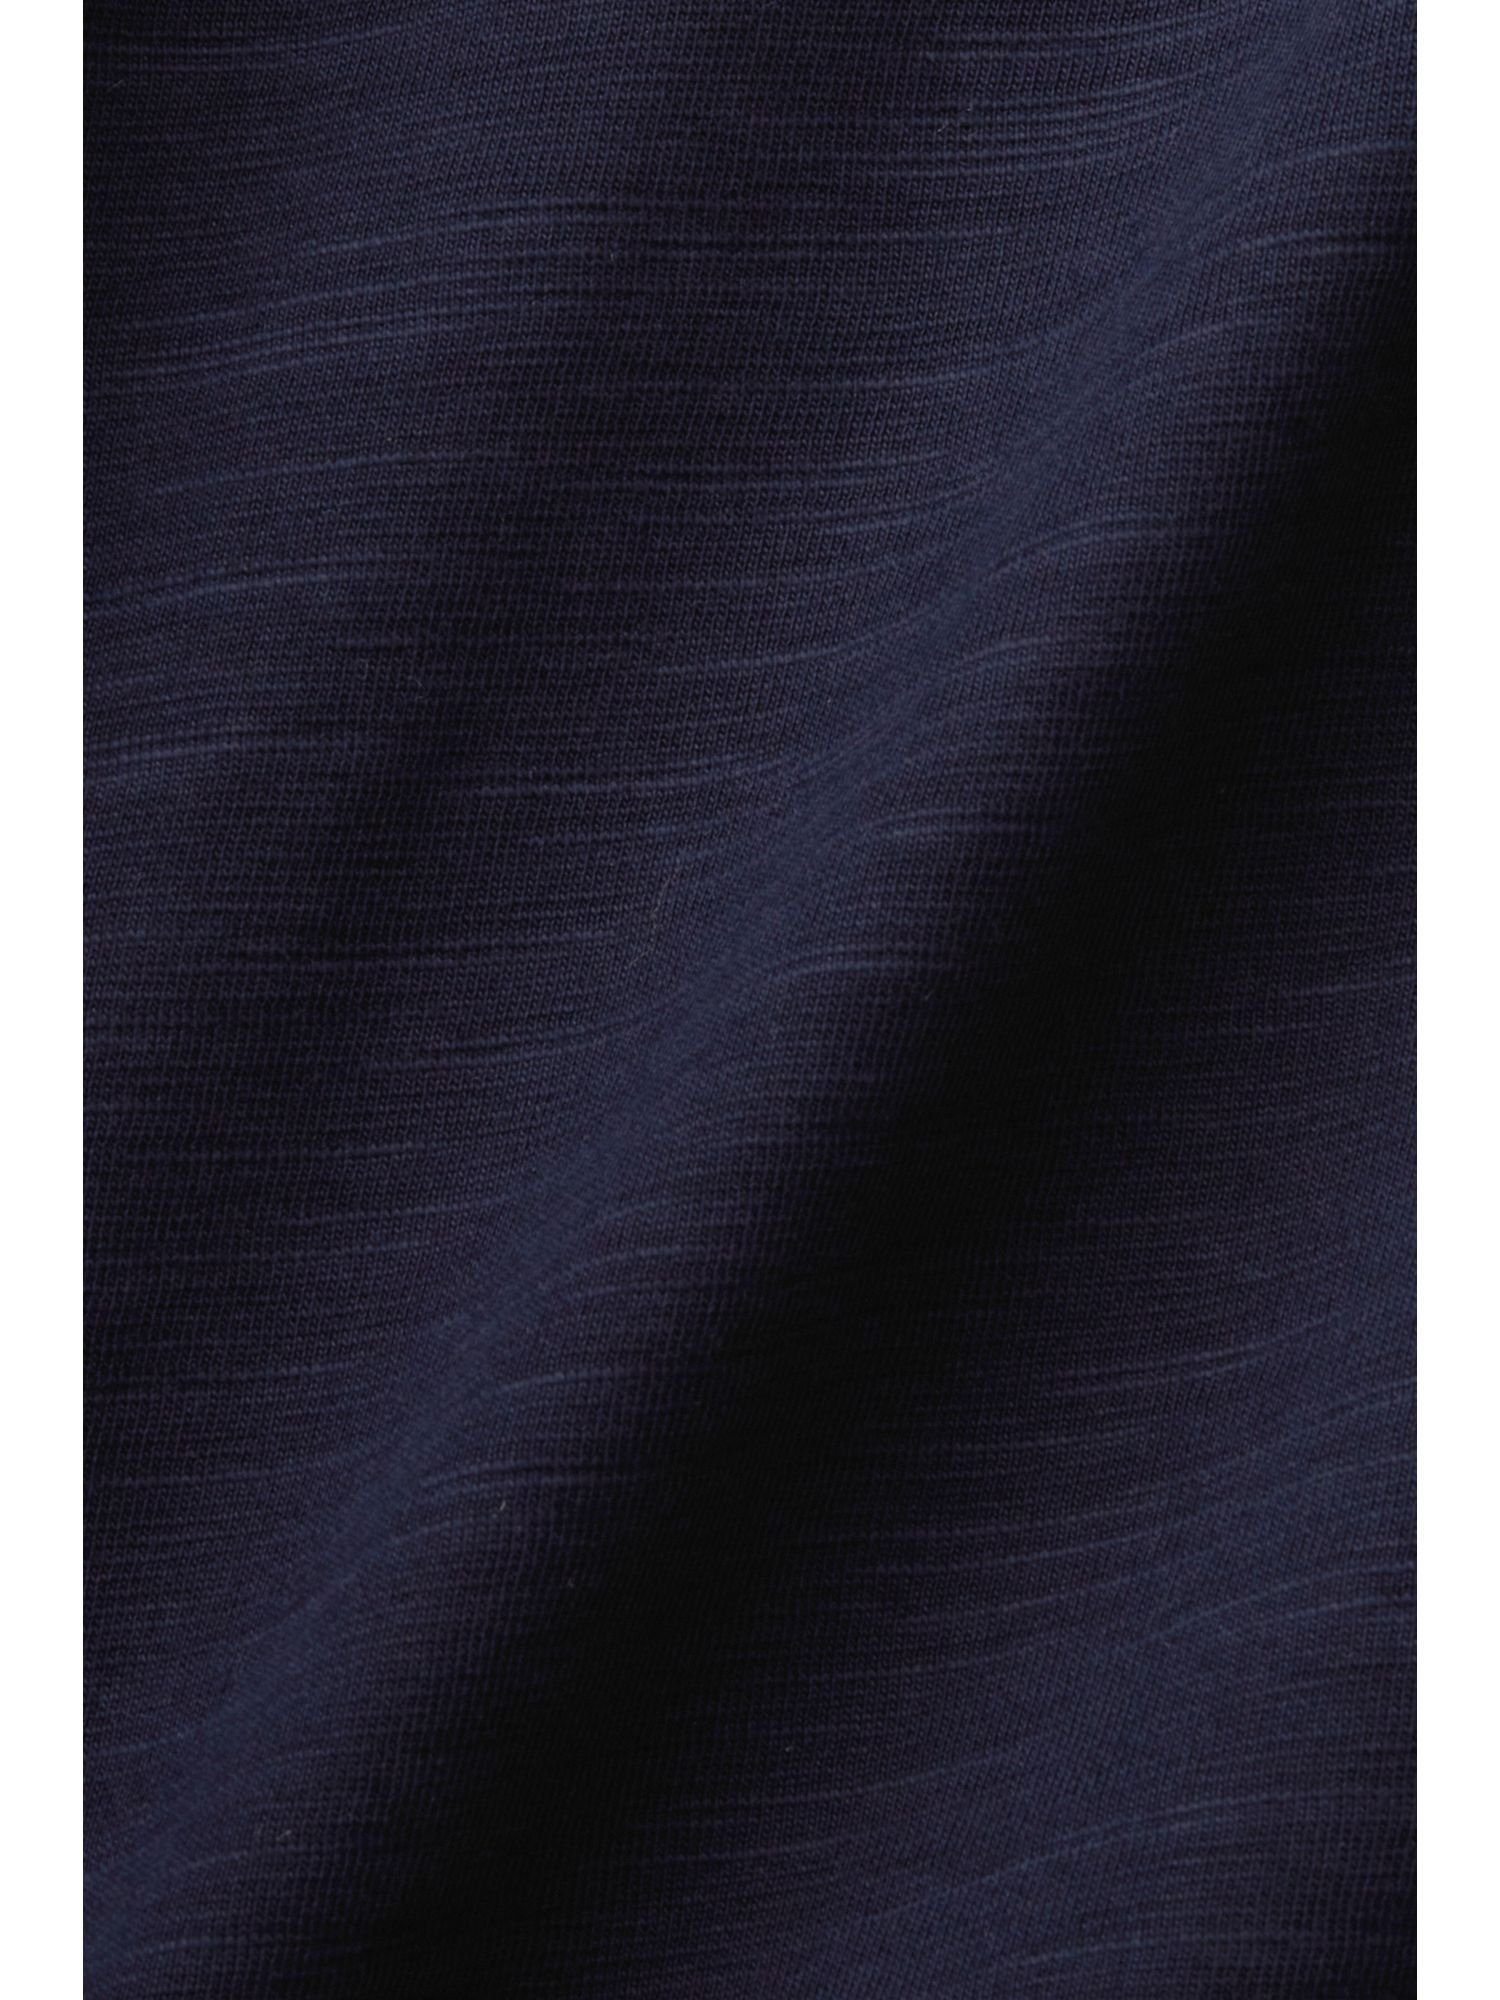 Poloshirt Jersey, Poloshirt Esprit NAVY Baumwolle % Collection 100 aus